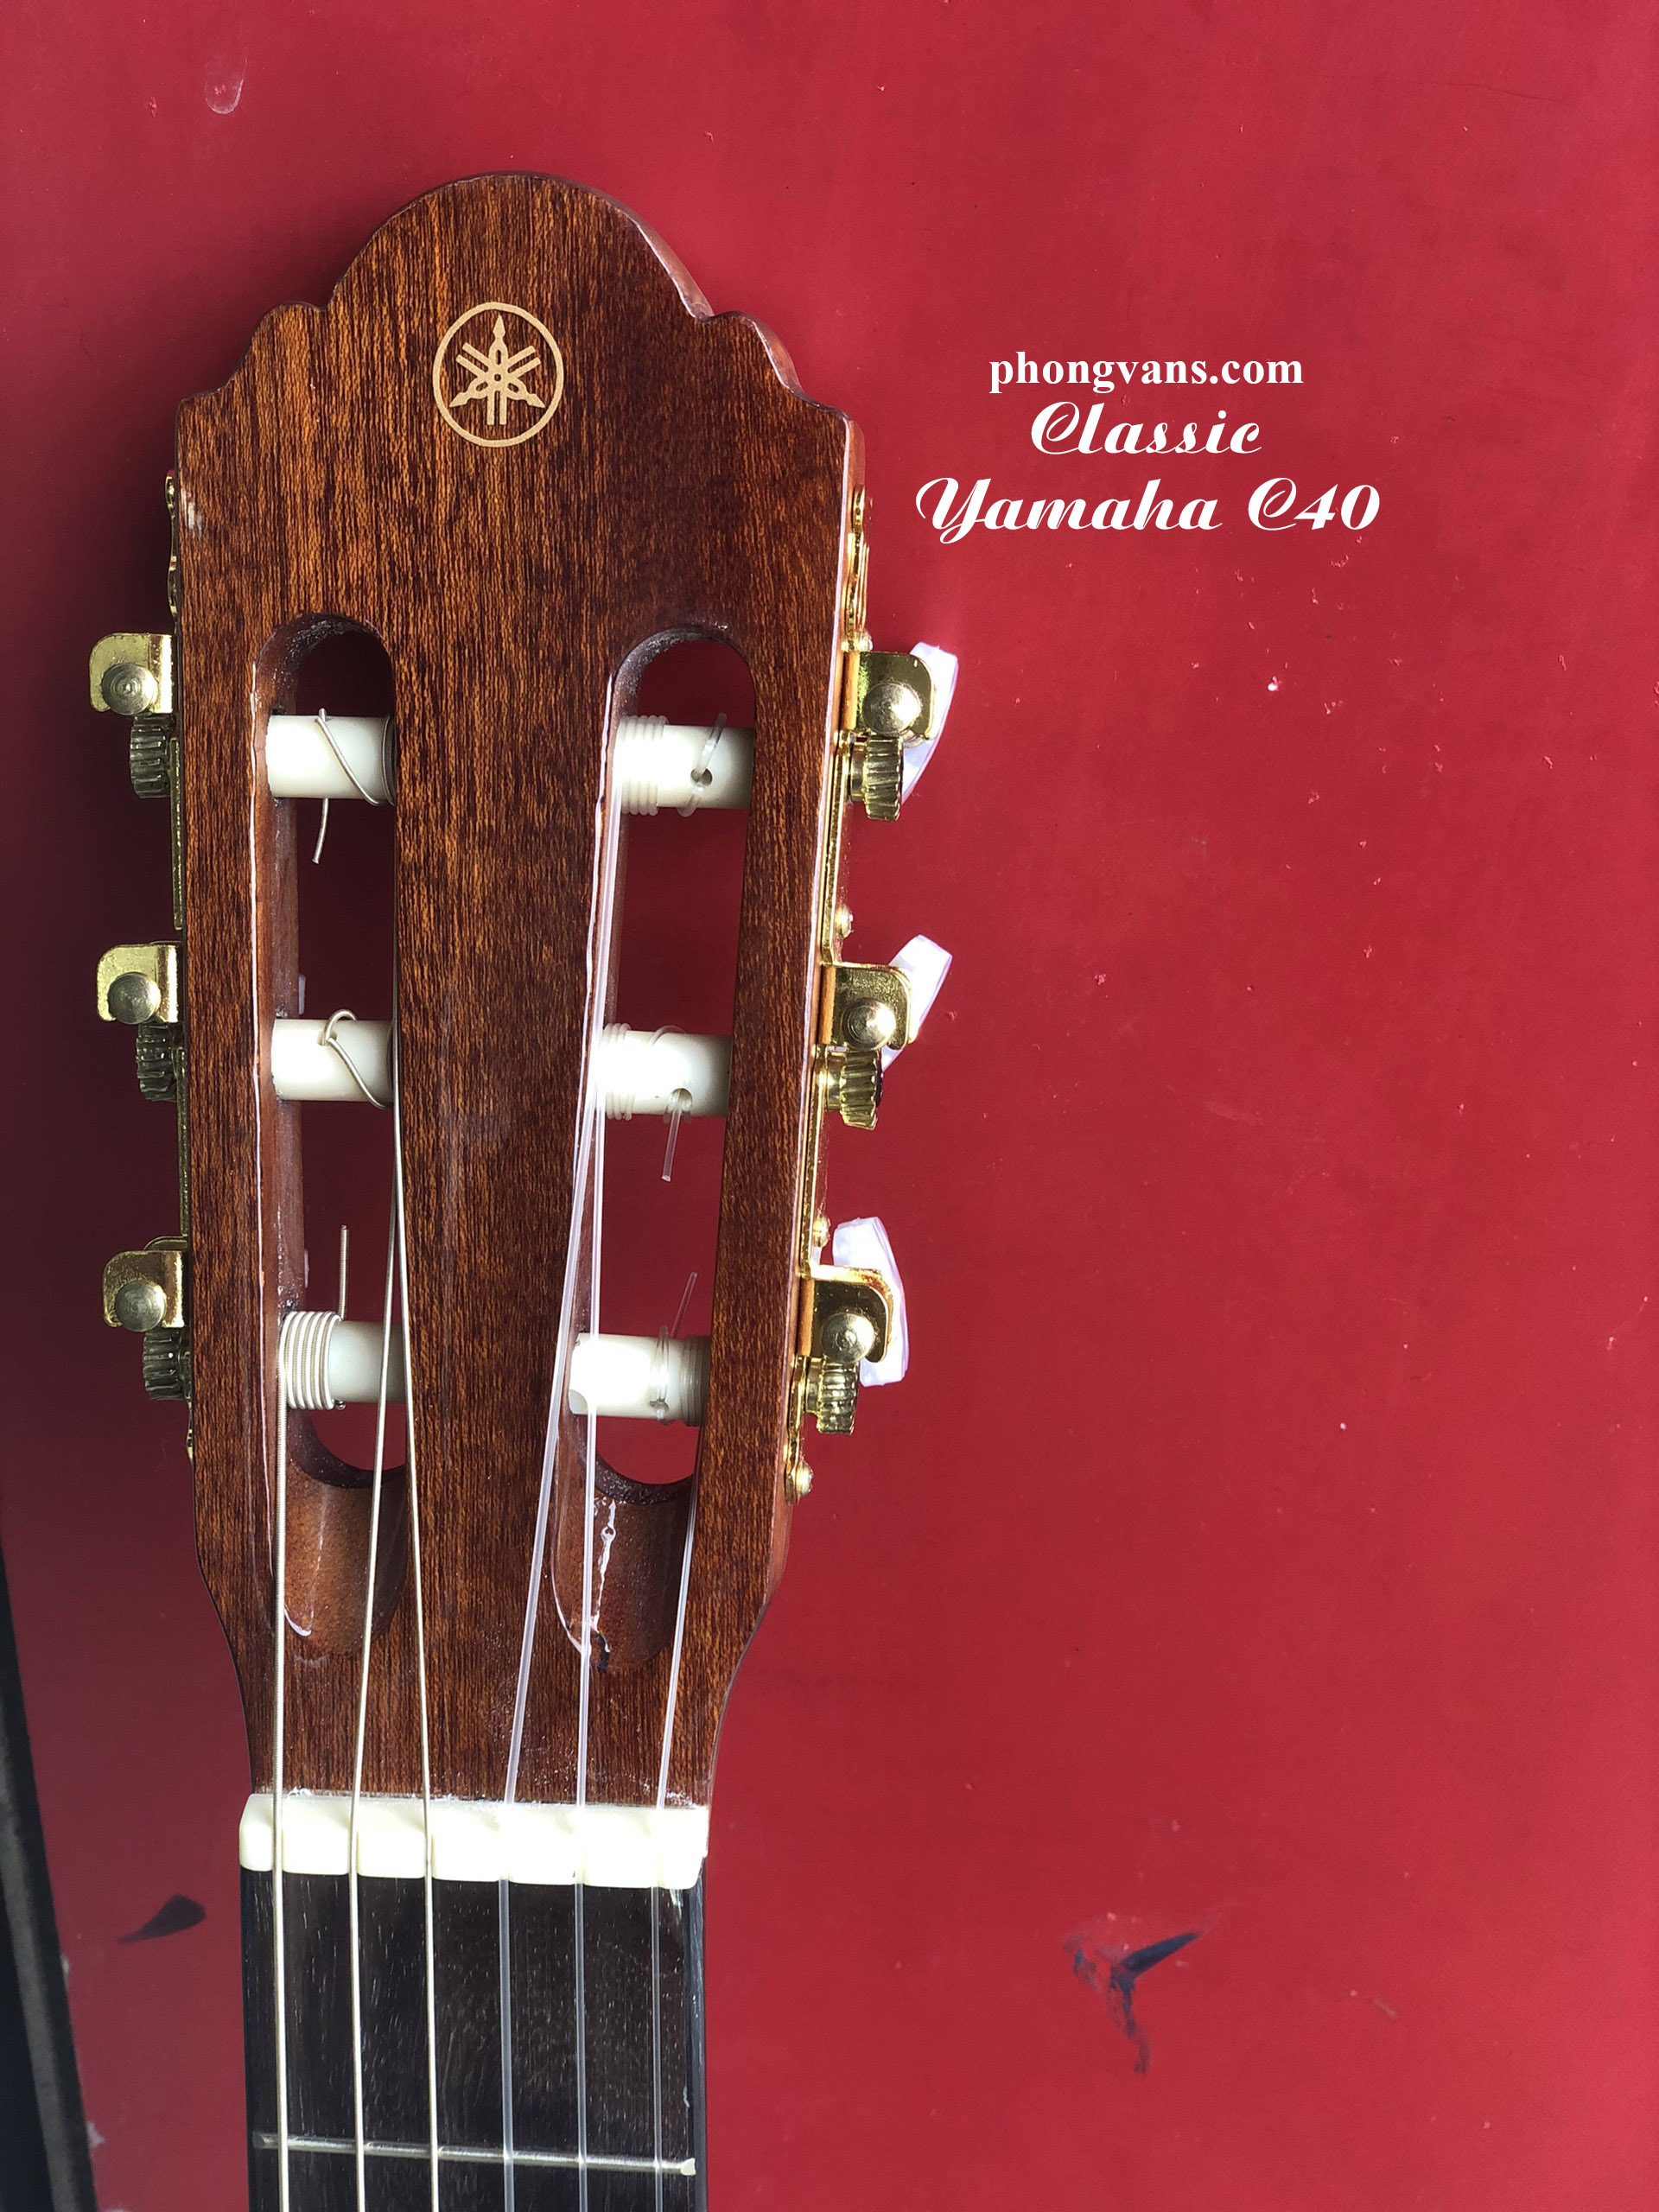 Đàn guitar classic yamaha c40